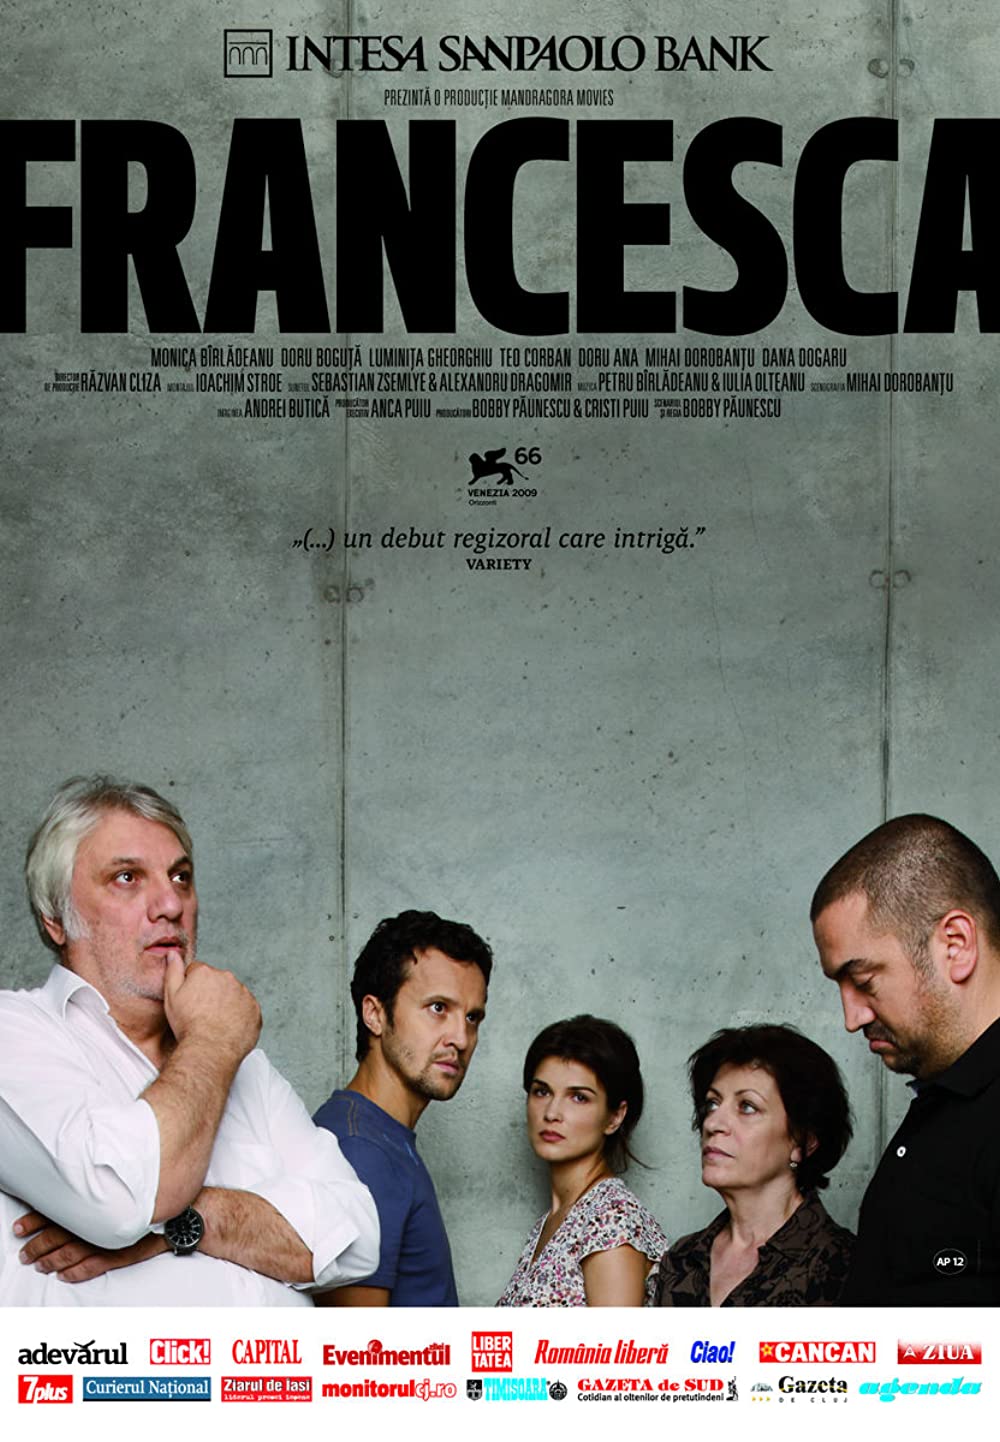 Download Francesca Movie | Francesca Hd, Dvd